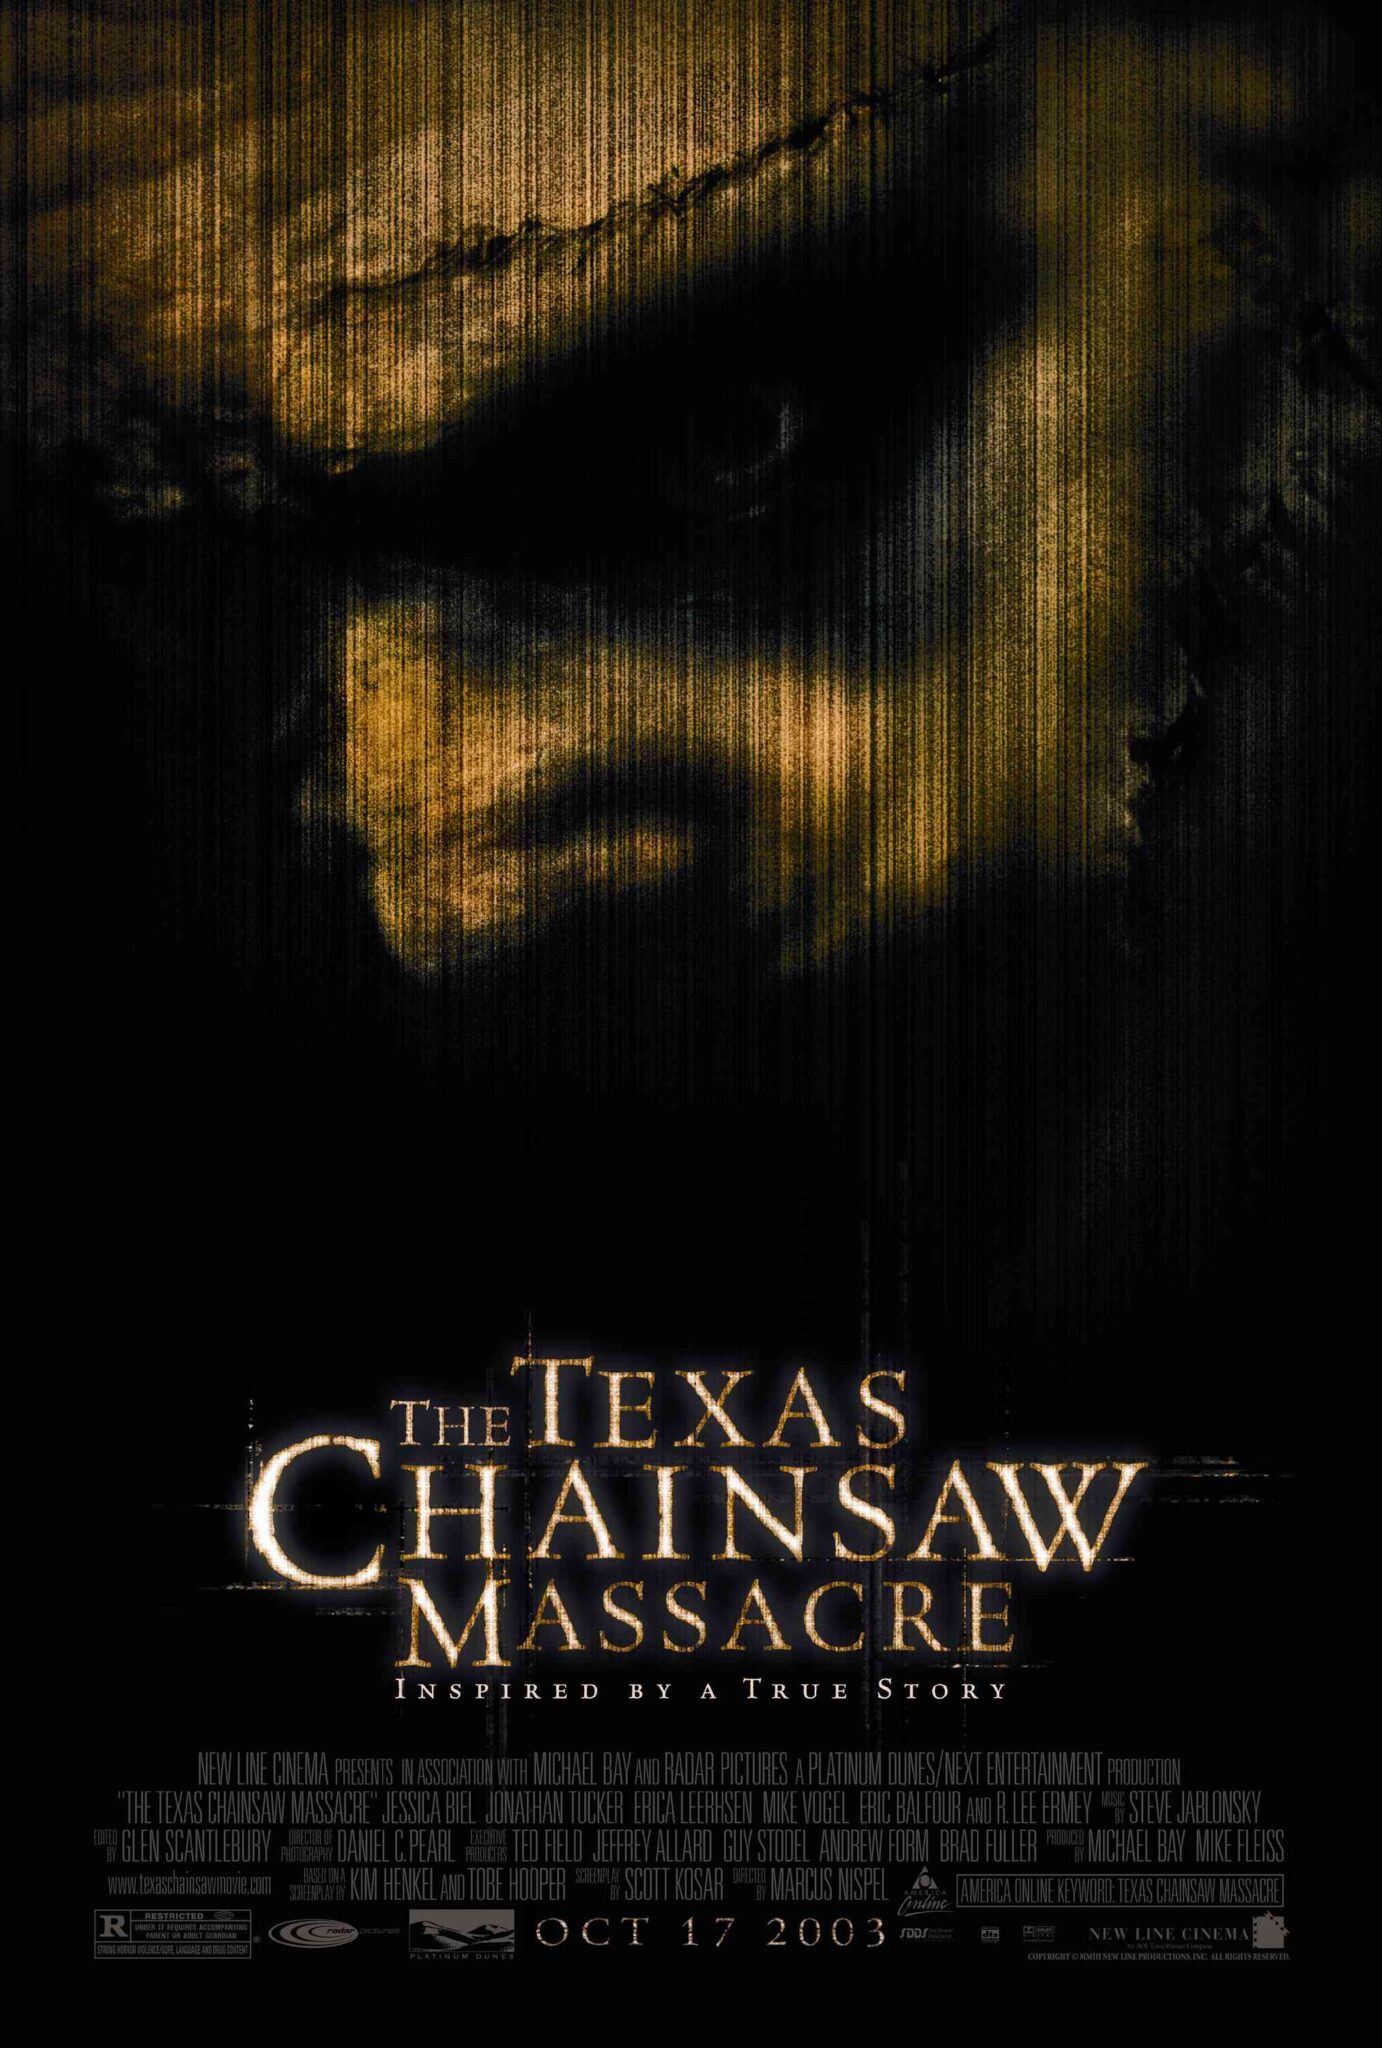 FULL MOVIE: The Texas Chainsaw Massacre (2003)